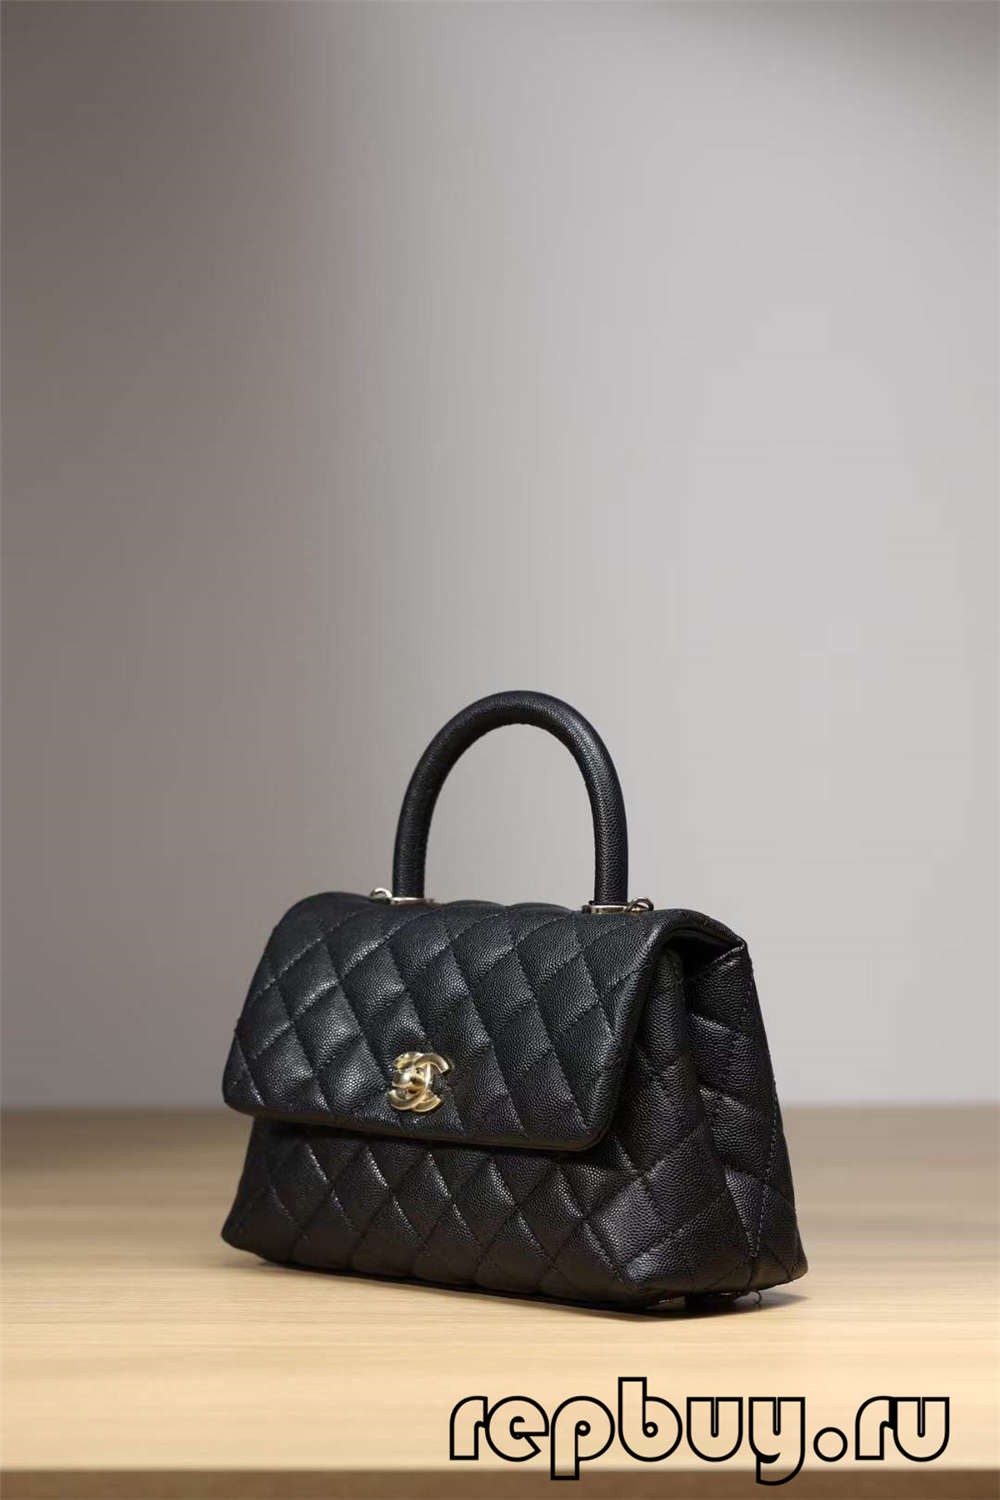 Chanel Coco Handle Top Replica Handbag Black Gold Buckle Look (2022 Frissítve) - A legjobb minőségű hamis Louis Vuitton táska online áruház, Replica designer bag ru